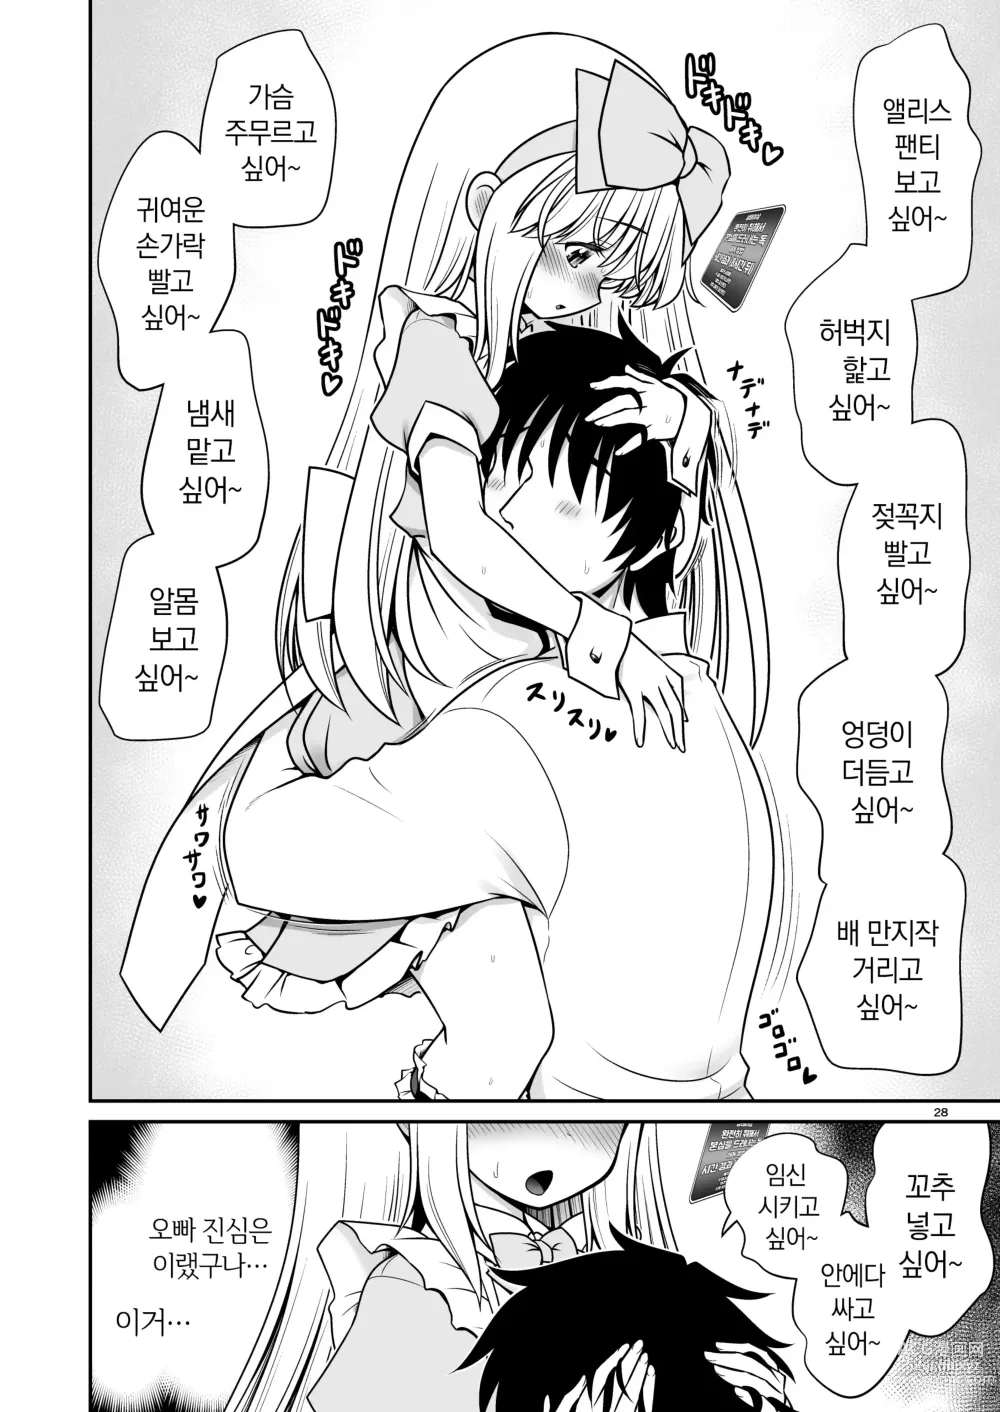 Page 28 of doujinshi 야한 해독에 푹빠져서 스스로 중독되는 곤란한 앨리스